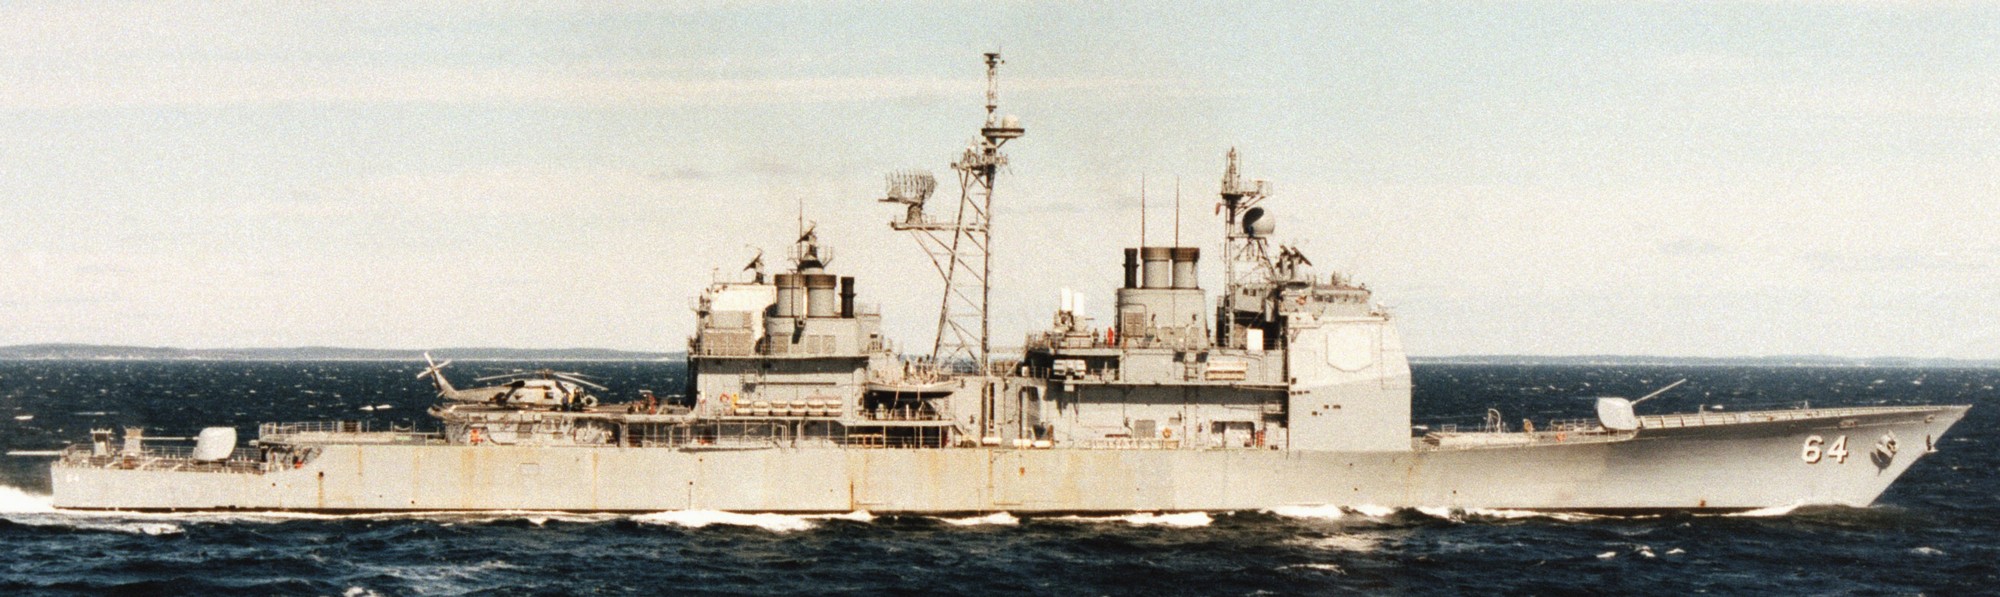 cg-64 uss gettysburg ticonderoga class guided missile cruiser aegis us navy sea trials 76